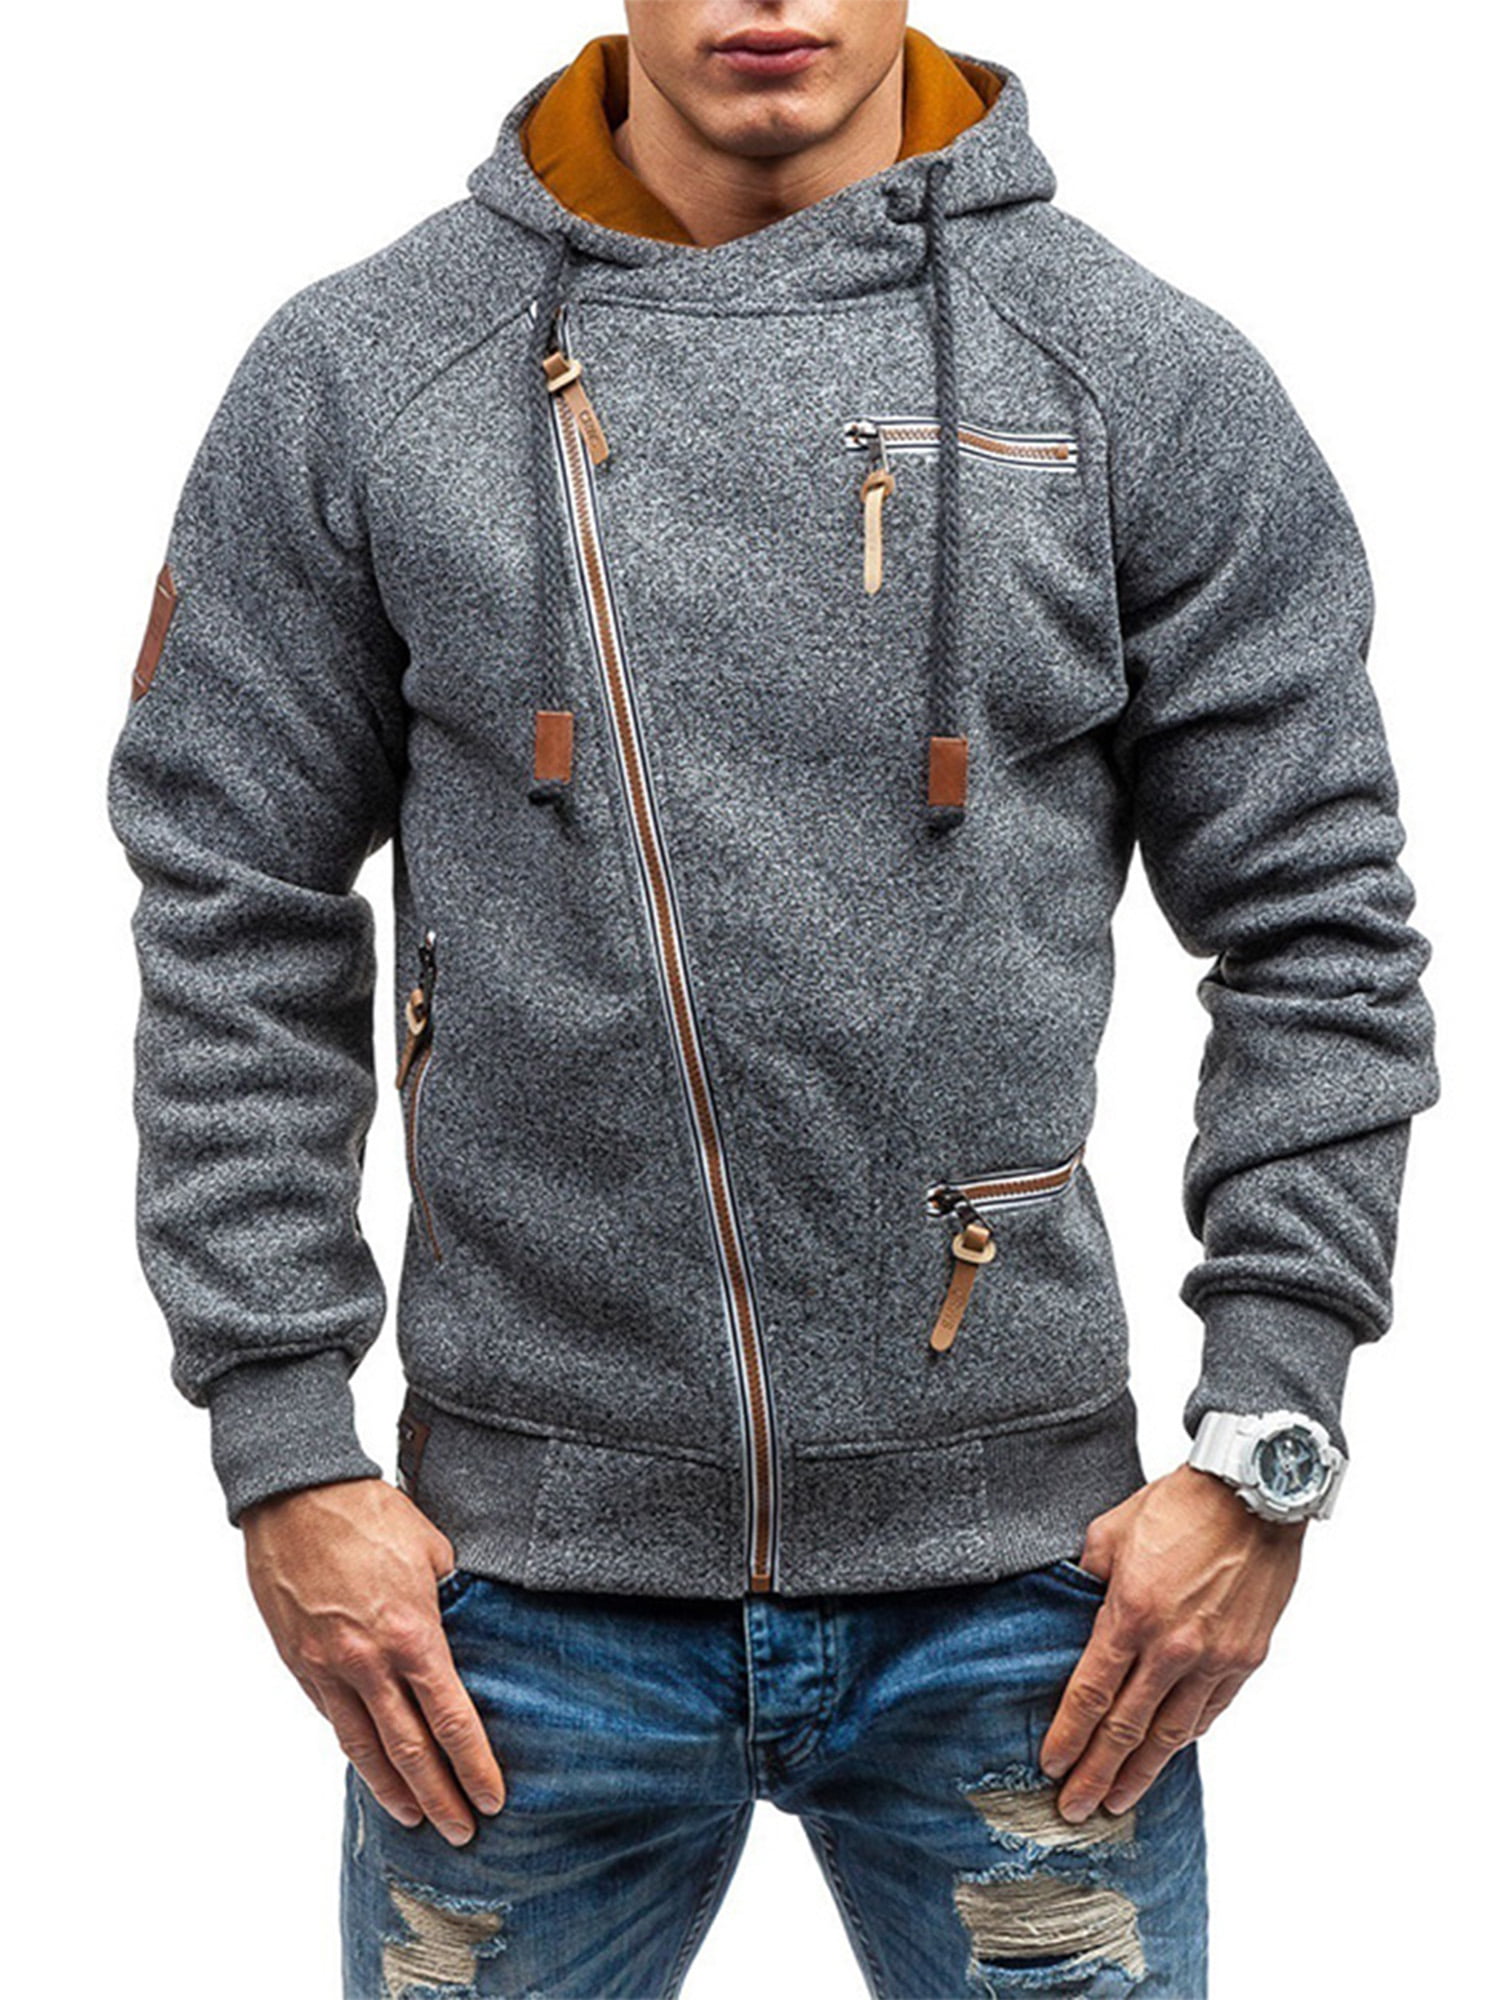 Men Long Sleeve Hoodie Coat Zipper Jacket Outwear Pullover Sweatshirt Tops NEW 